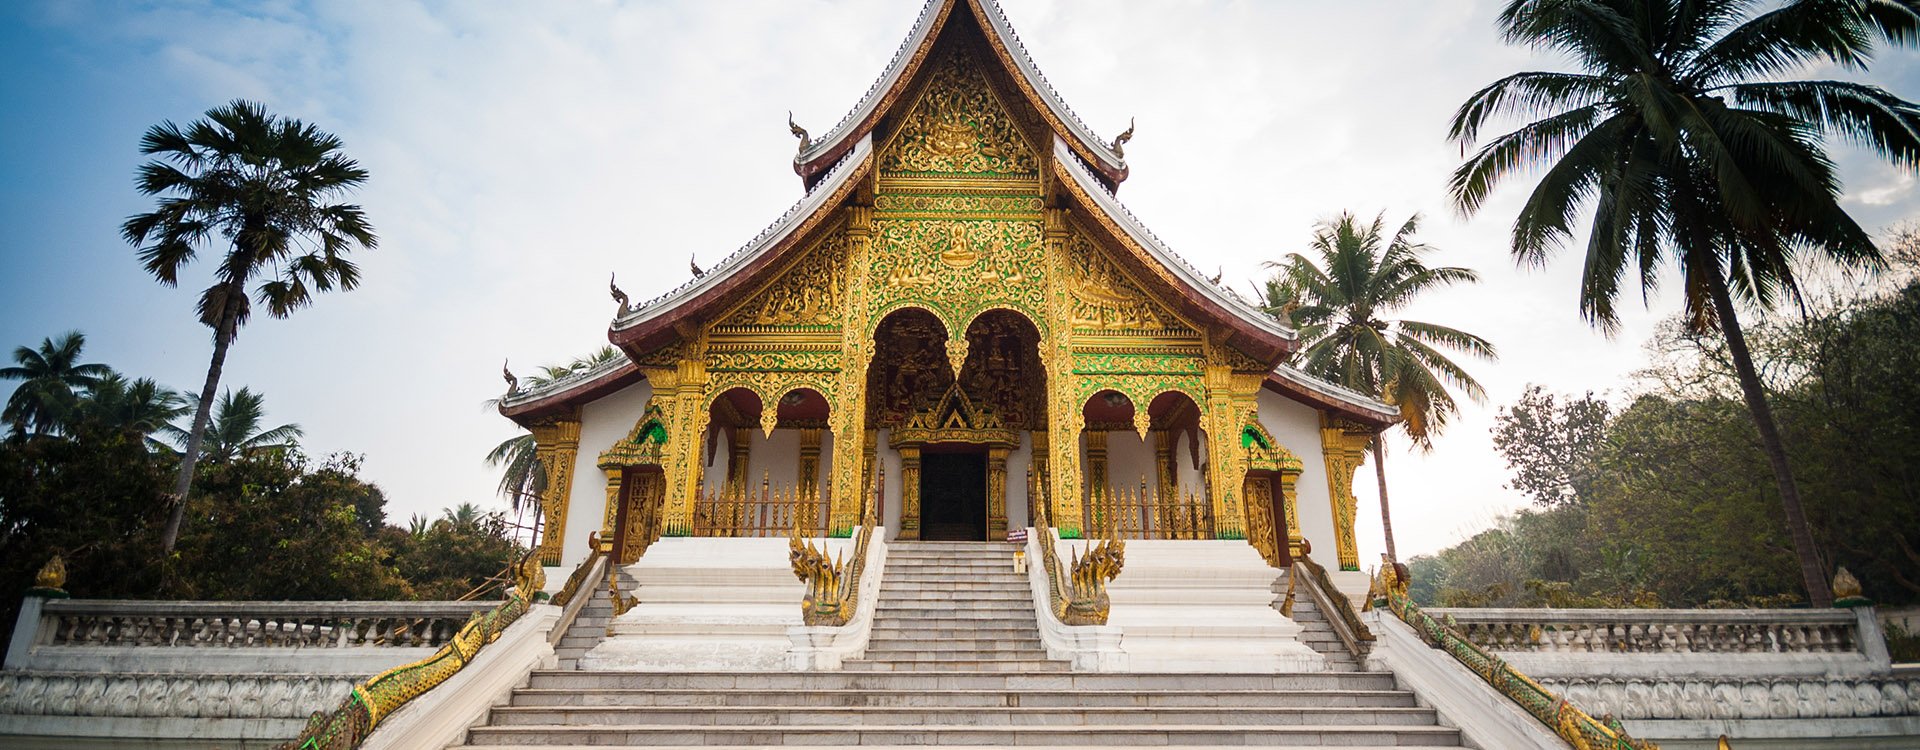 White stairs with dragon railings to golden entrance ofLuang Prabang Royal Palace, Laos